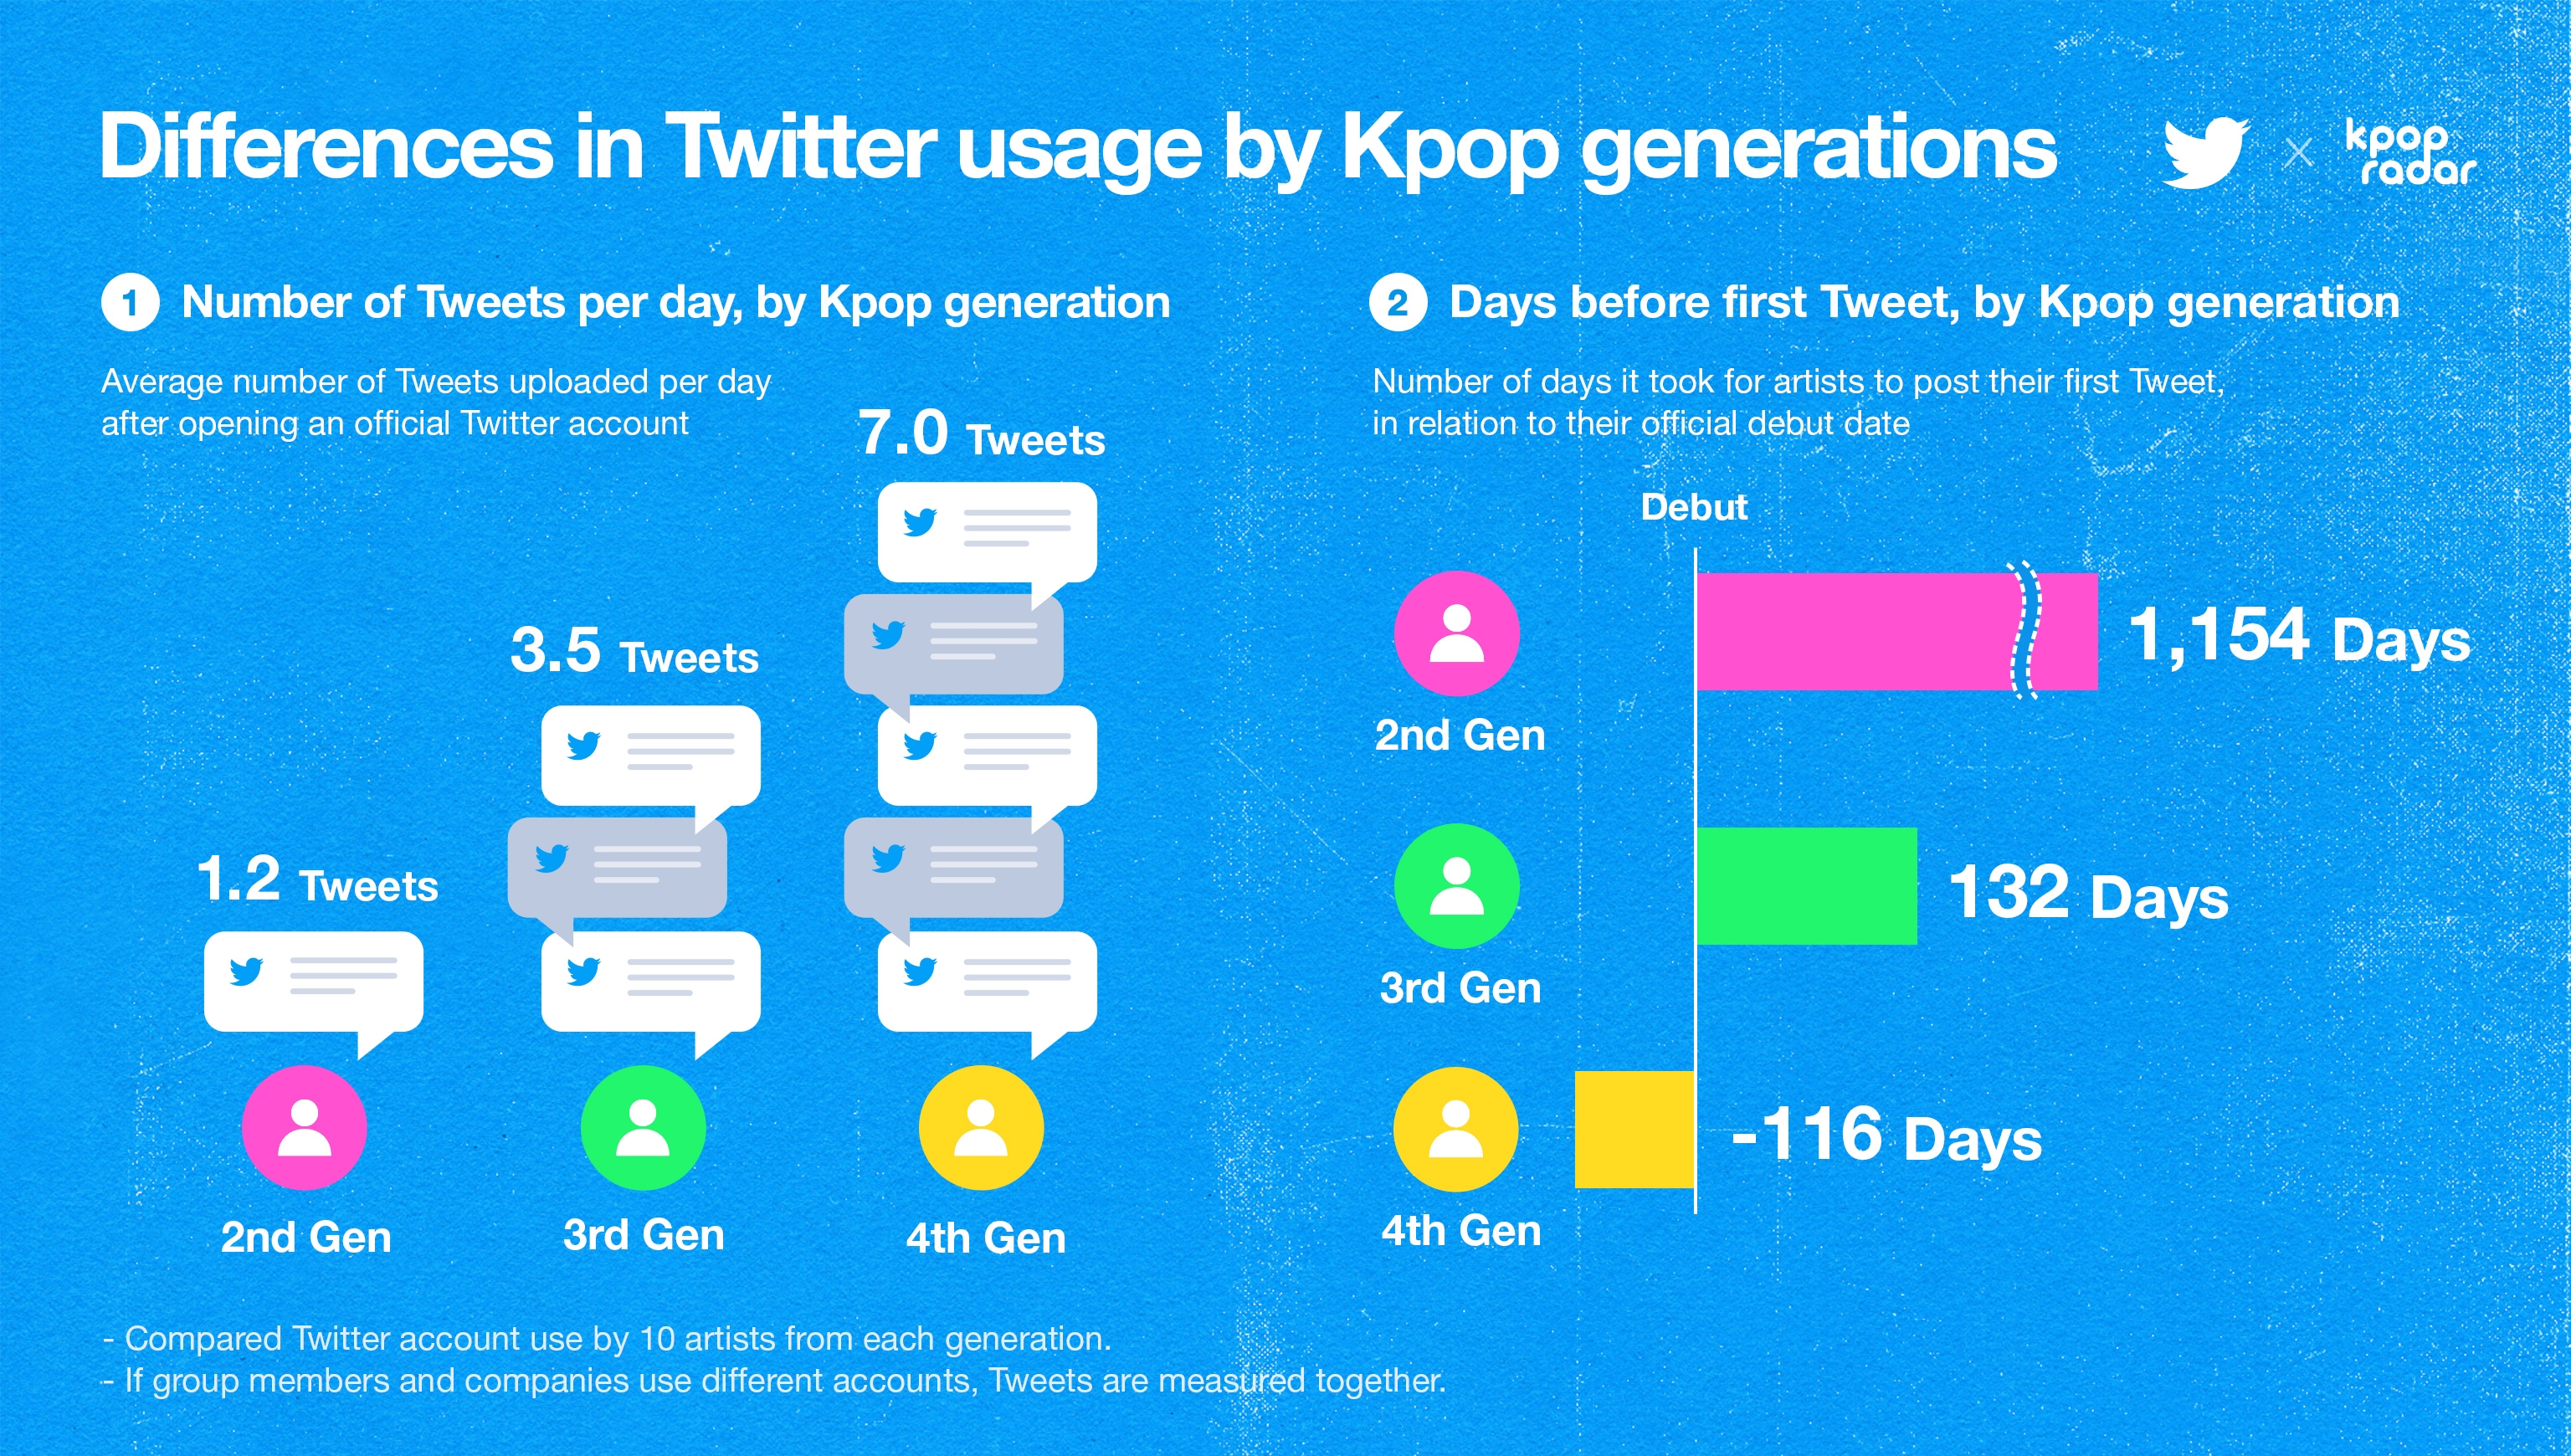 k-pop: K-pop: 4th gen K-pop groups you may listen to - The Economic Times,  groups kpop 